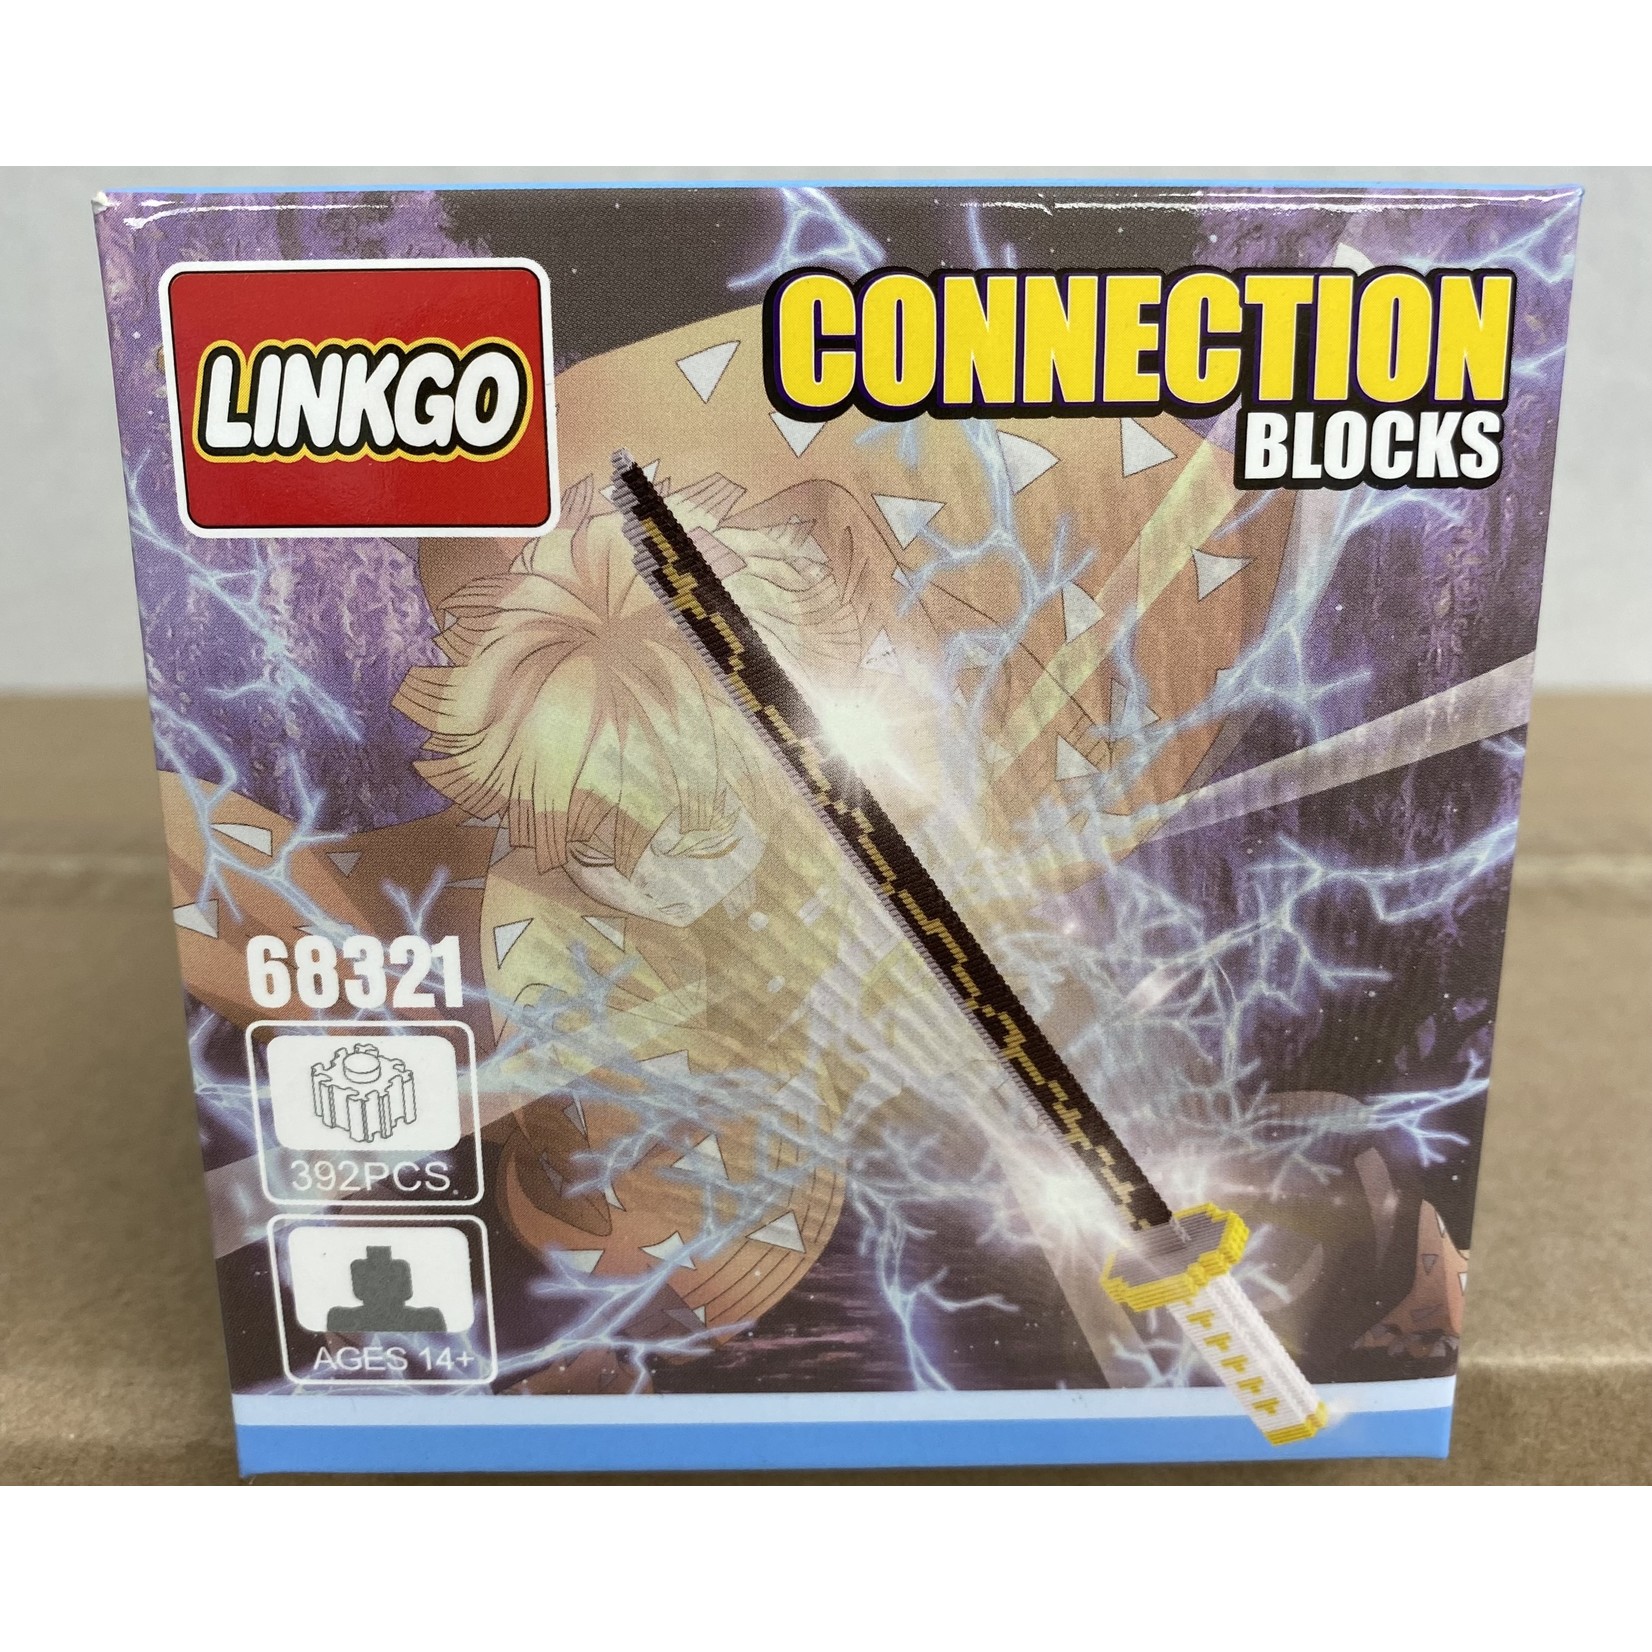 Linkgo - Connection Blocks - 68321